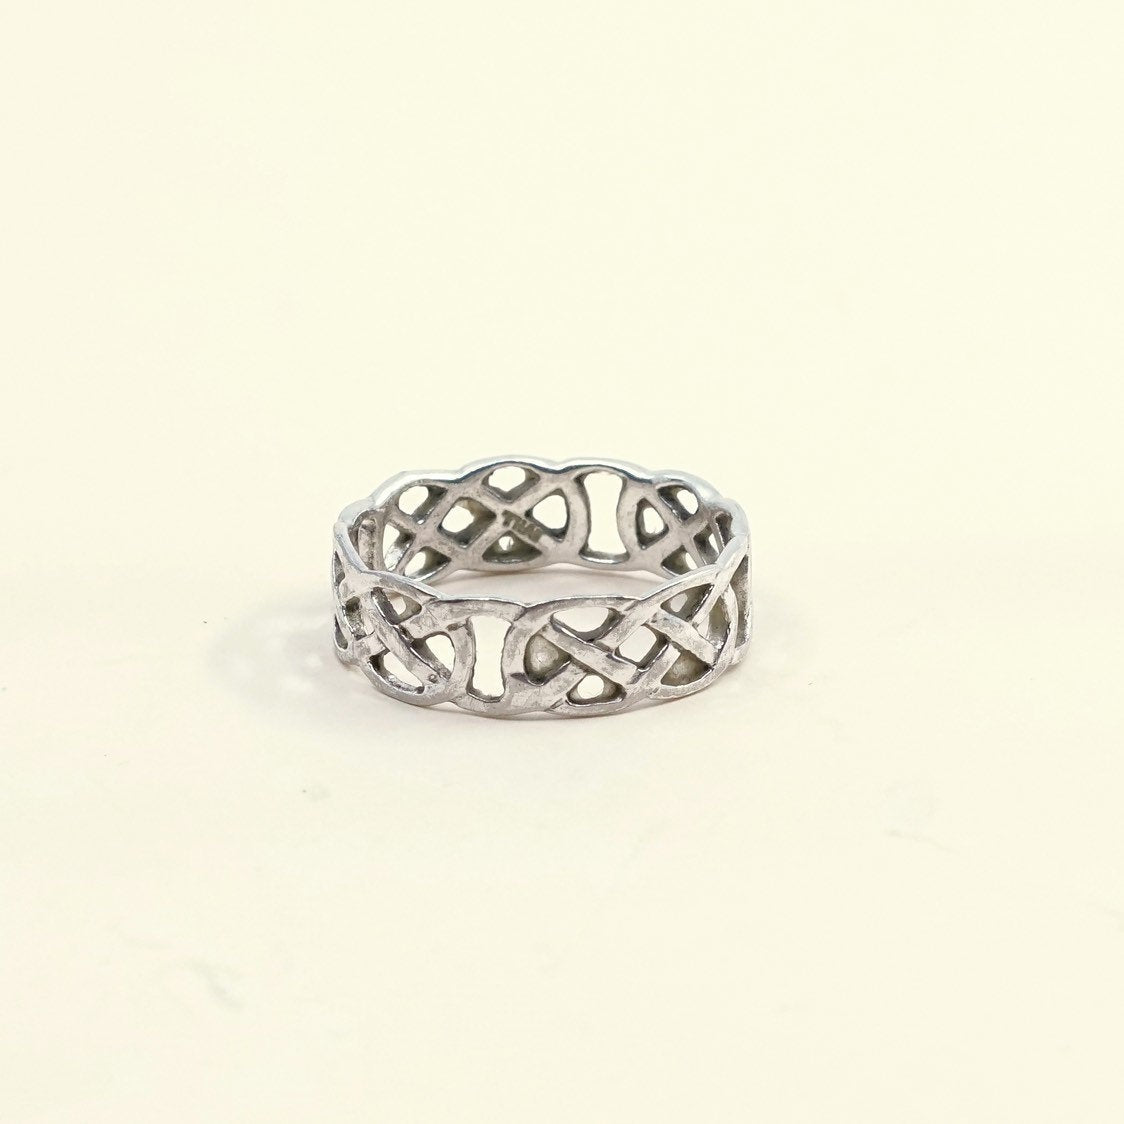 Size 9.75, vtg sterling silver handmade ring, 925 woven band w/ filigree